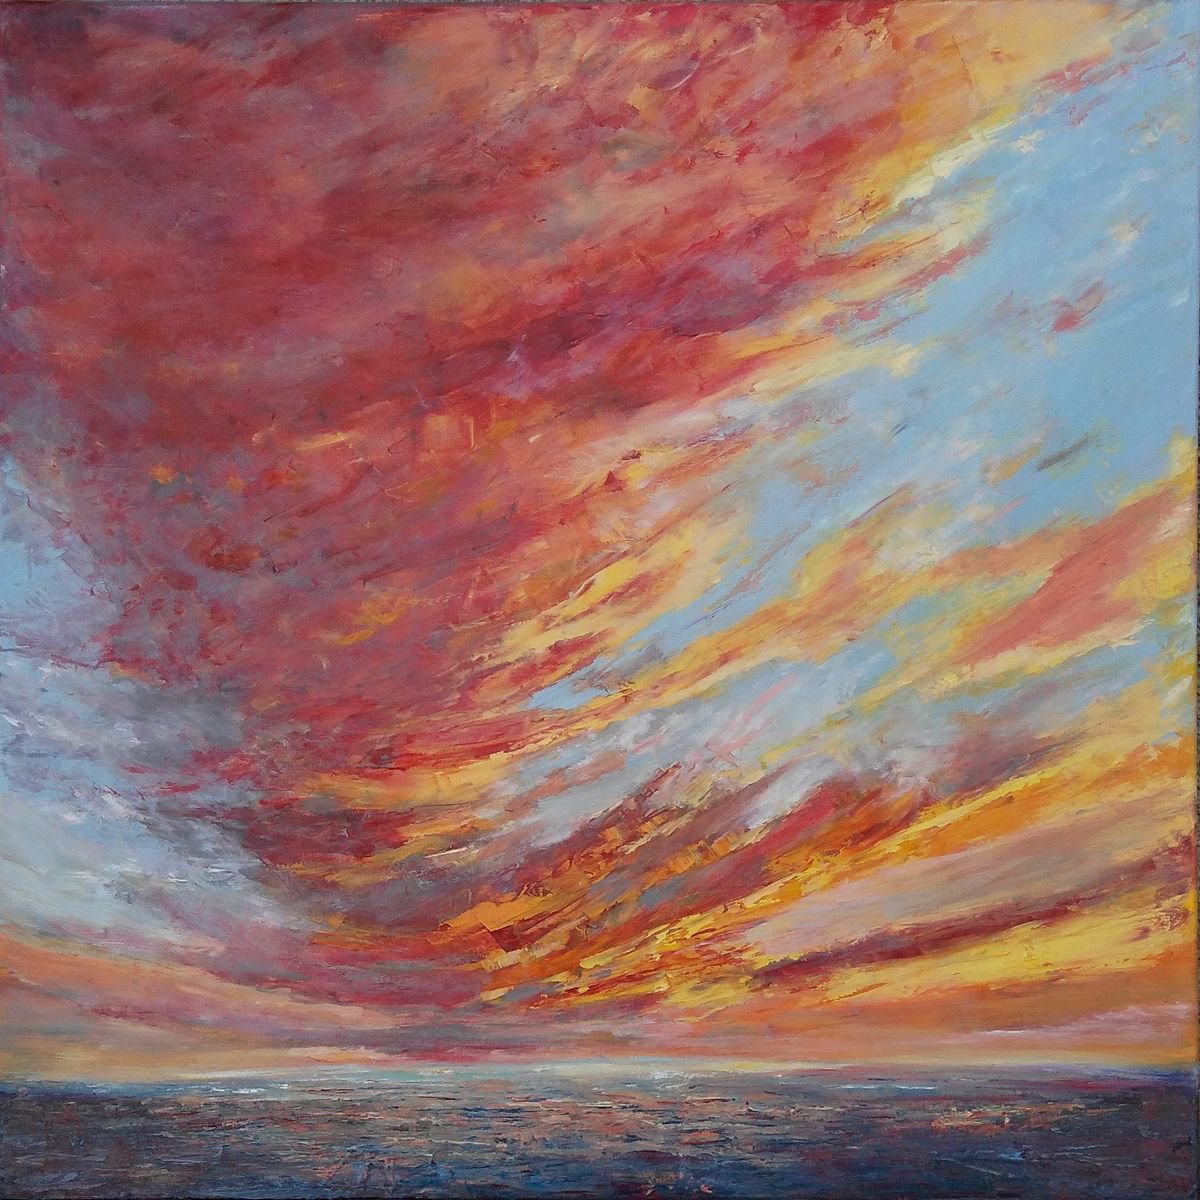 PASSIONATELY, 80x80cm, dramatic skies sunset landscape by Emilia Milcheva